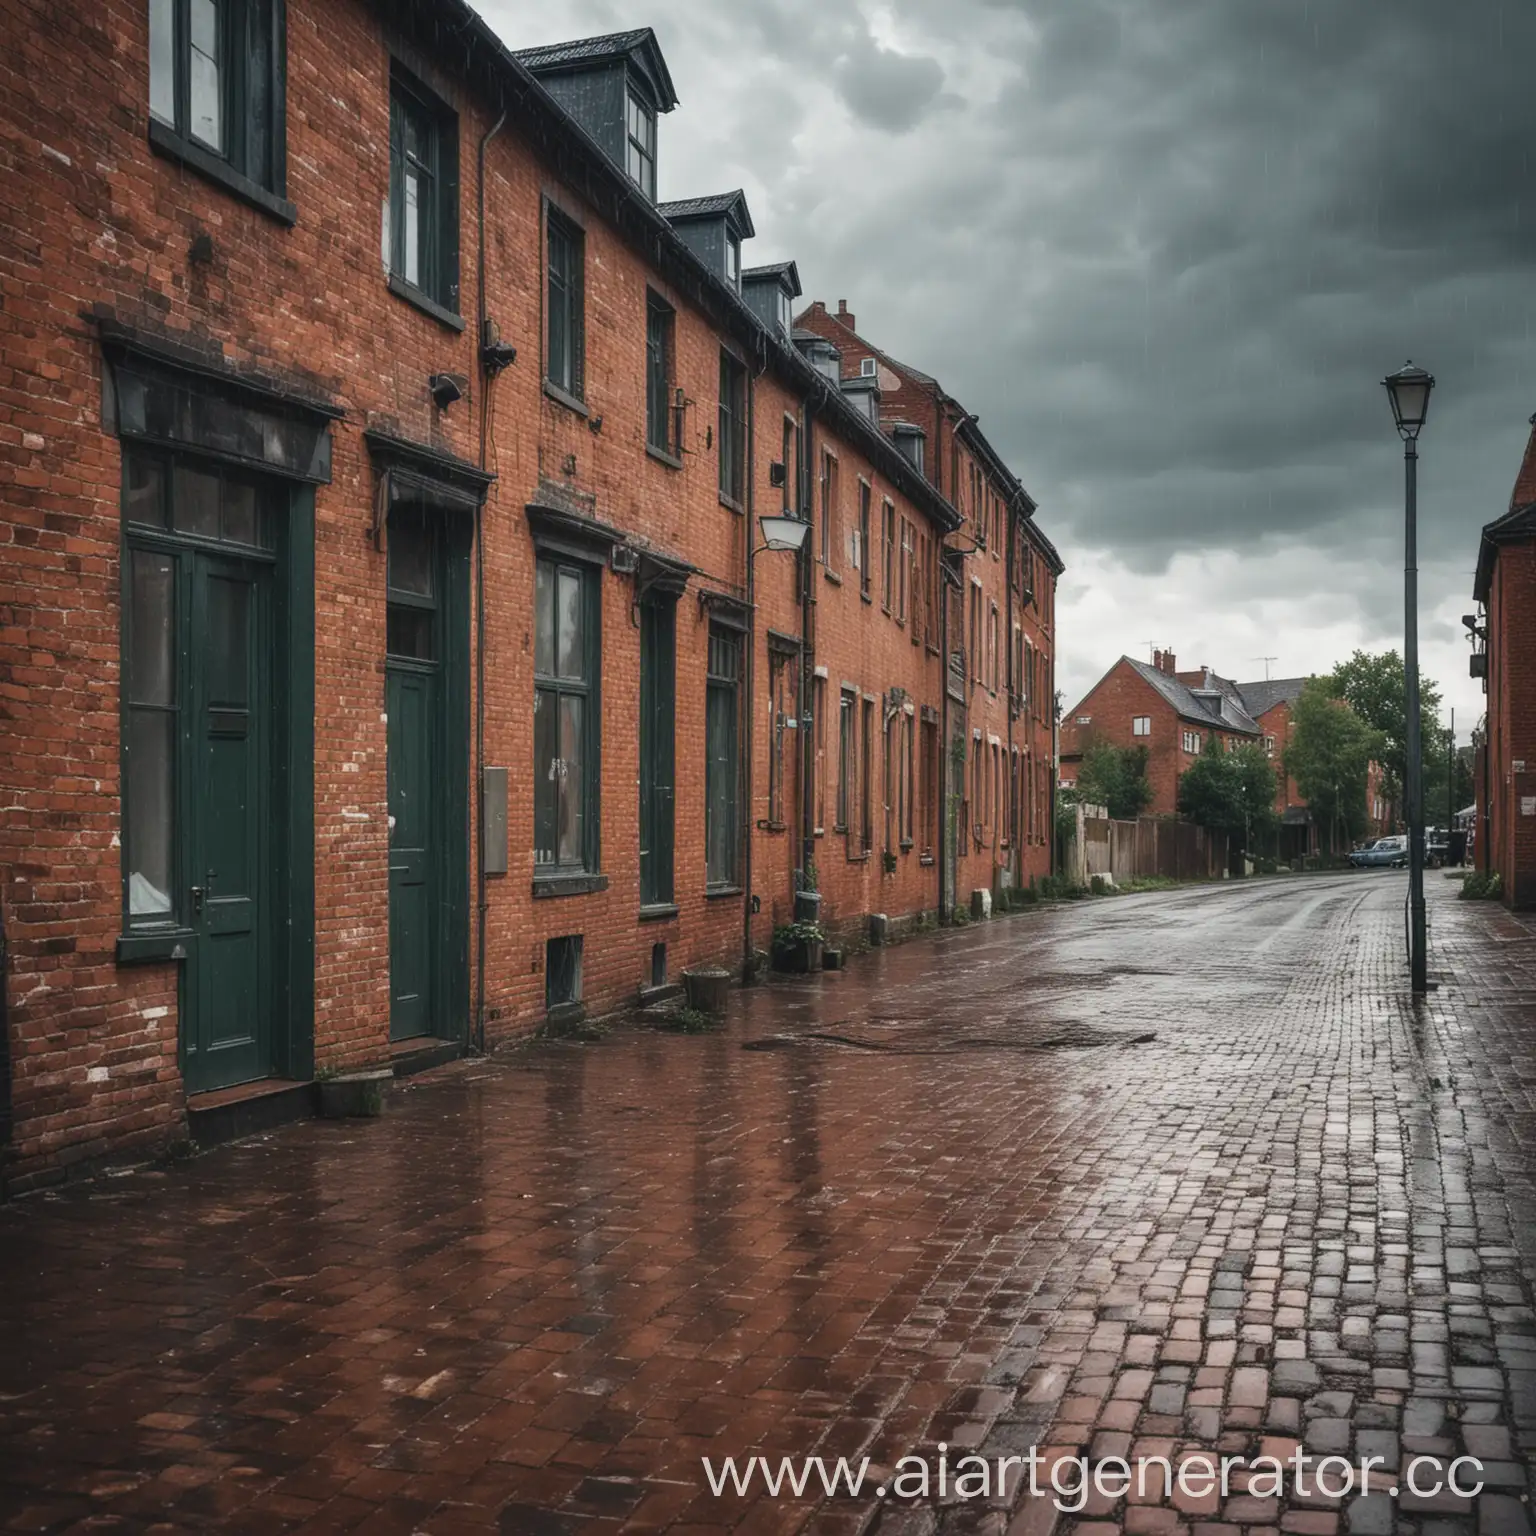 Deserted-Brick-House-and-Shop-on-Rainy-Summer-Street